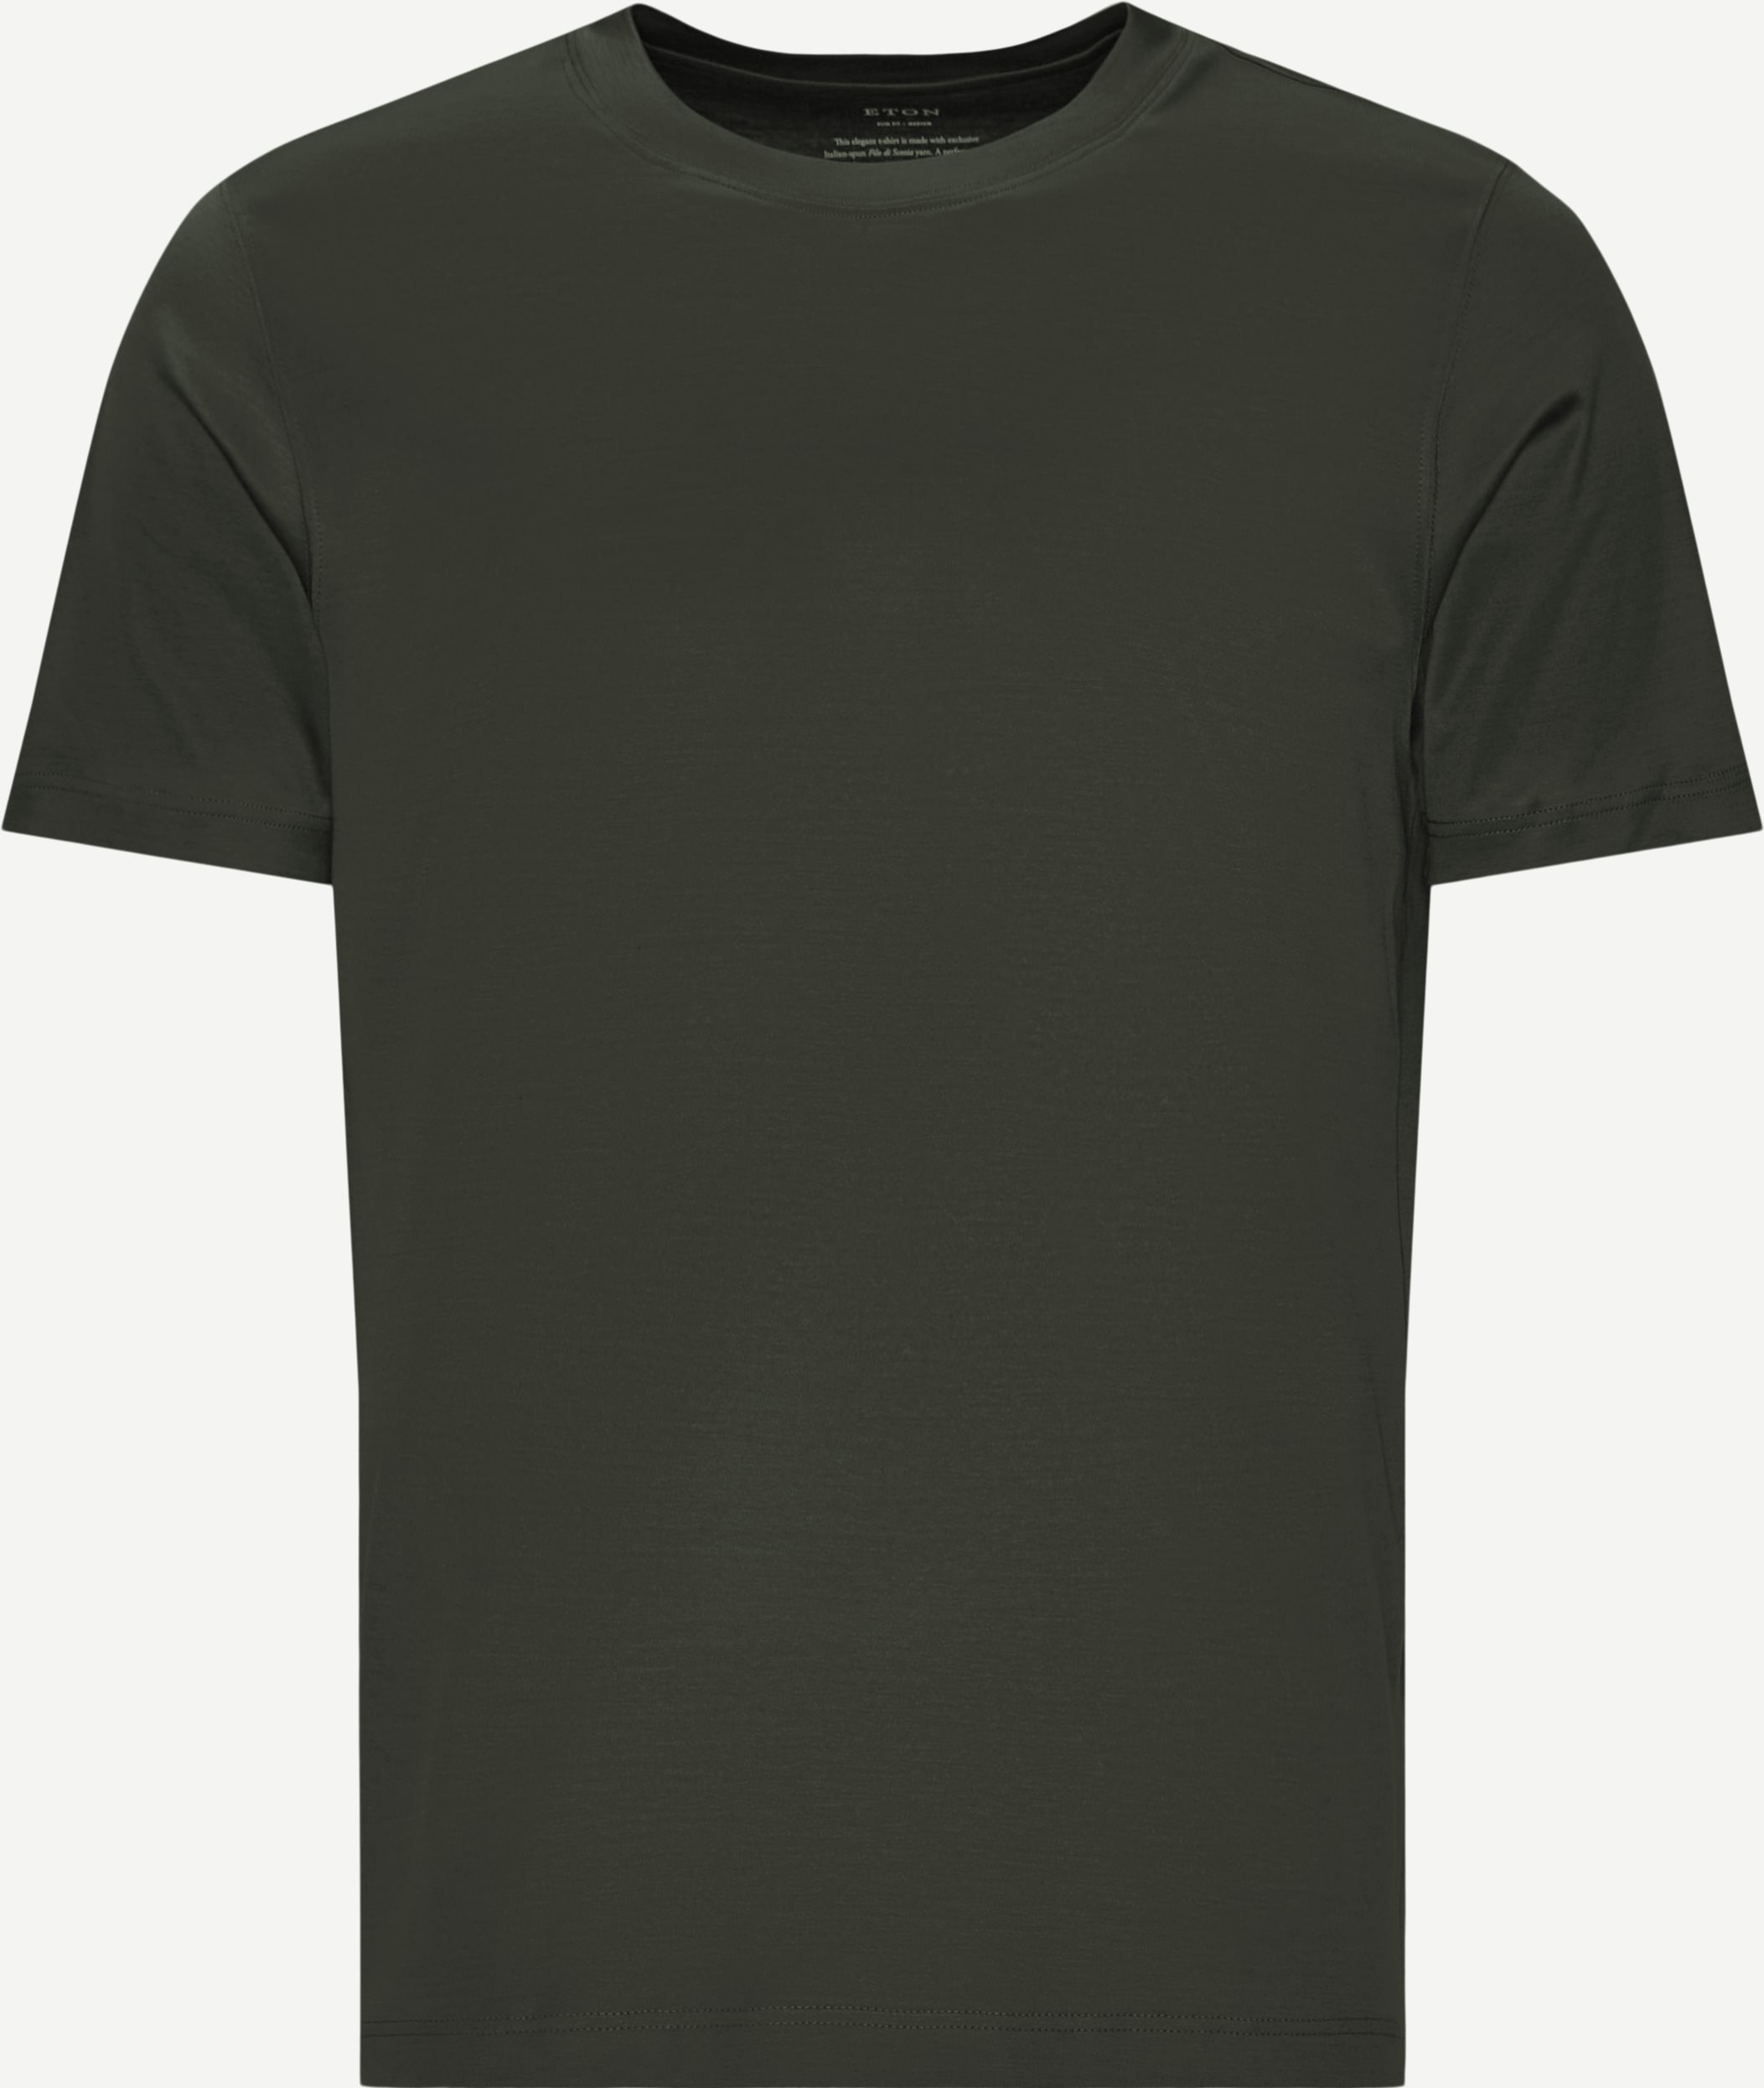 Eton T-shirts 592 Army